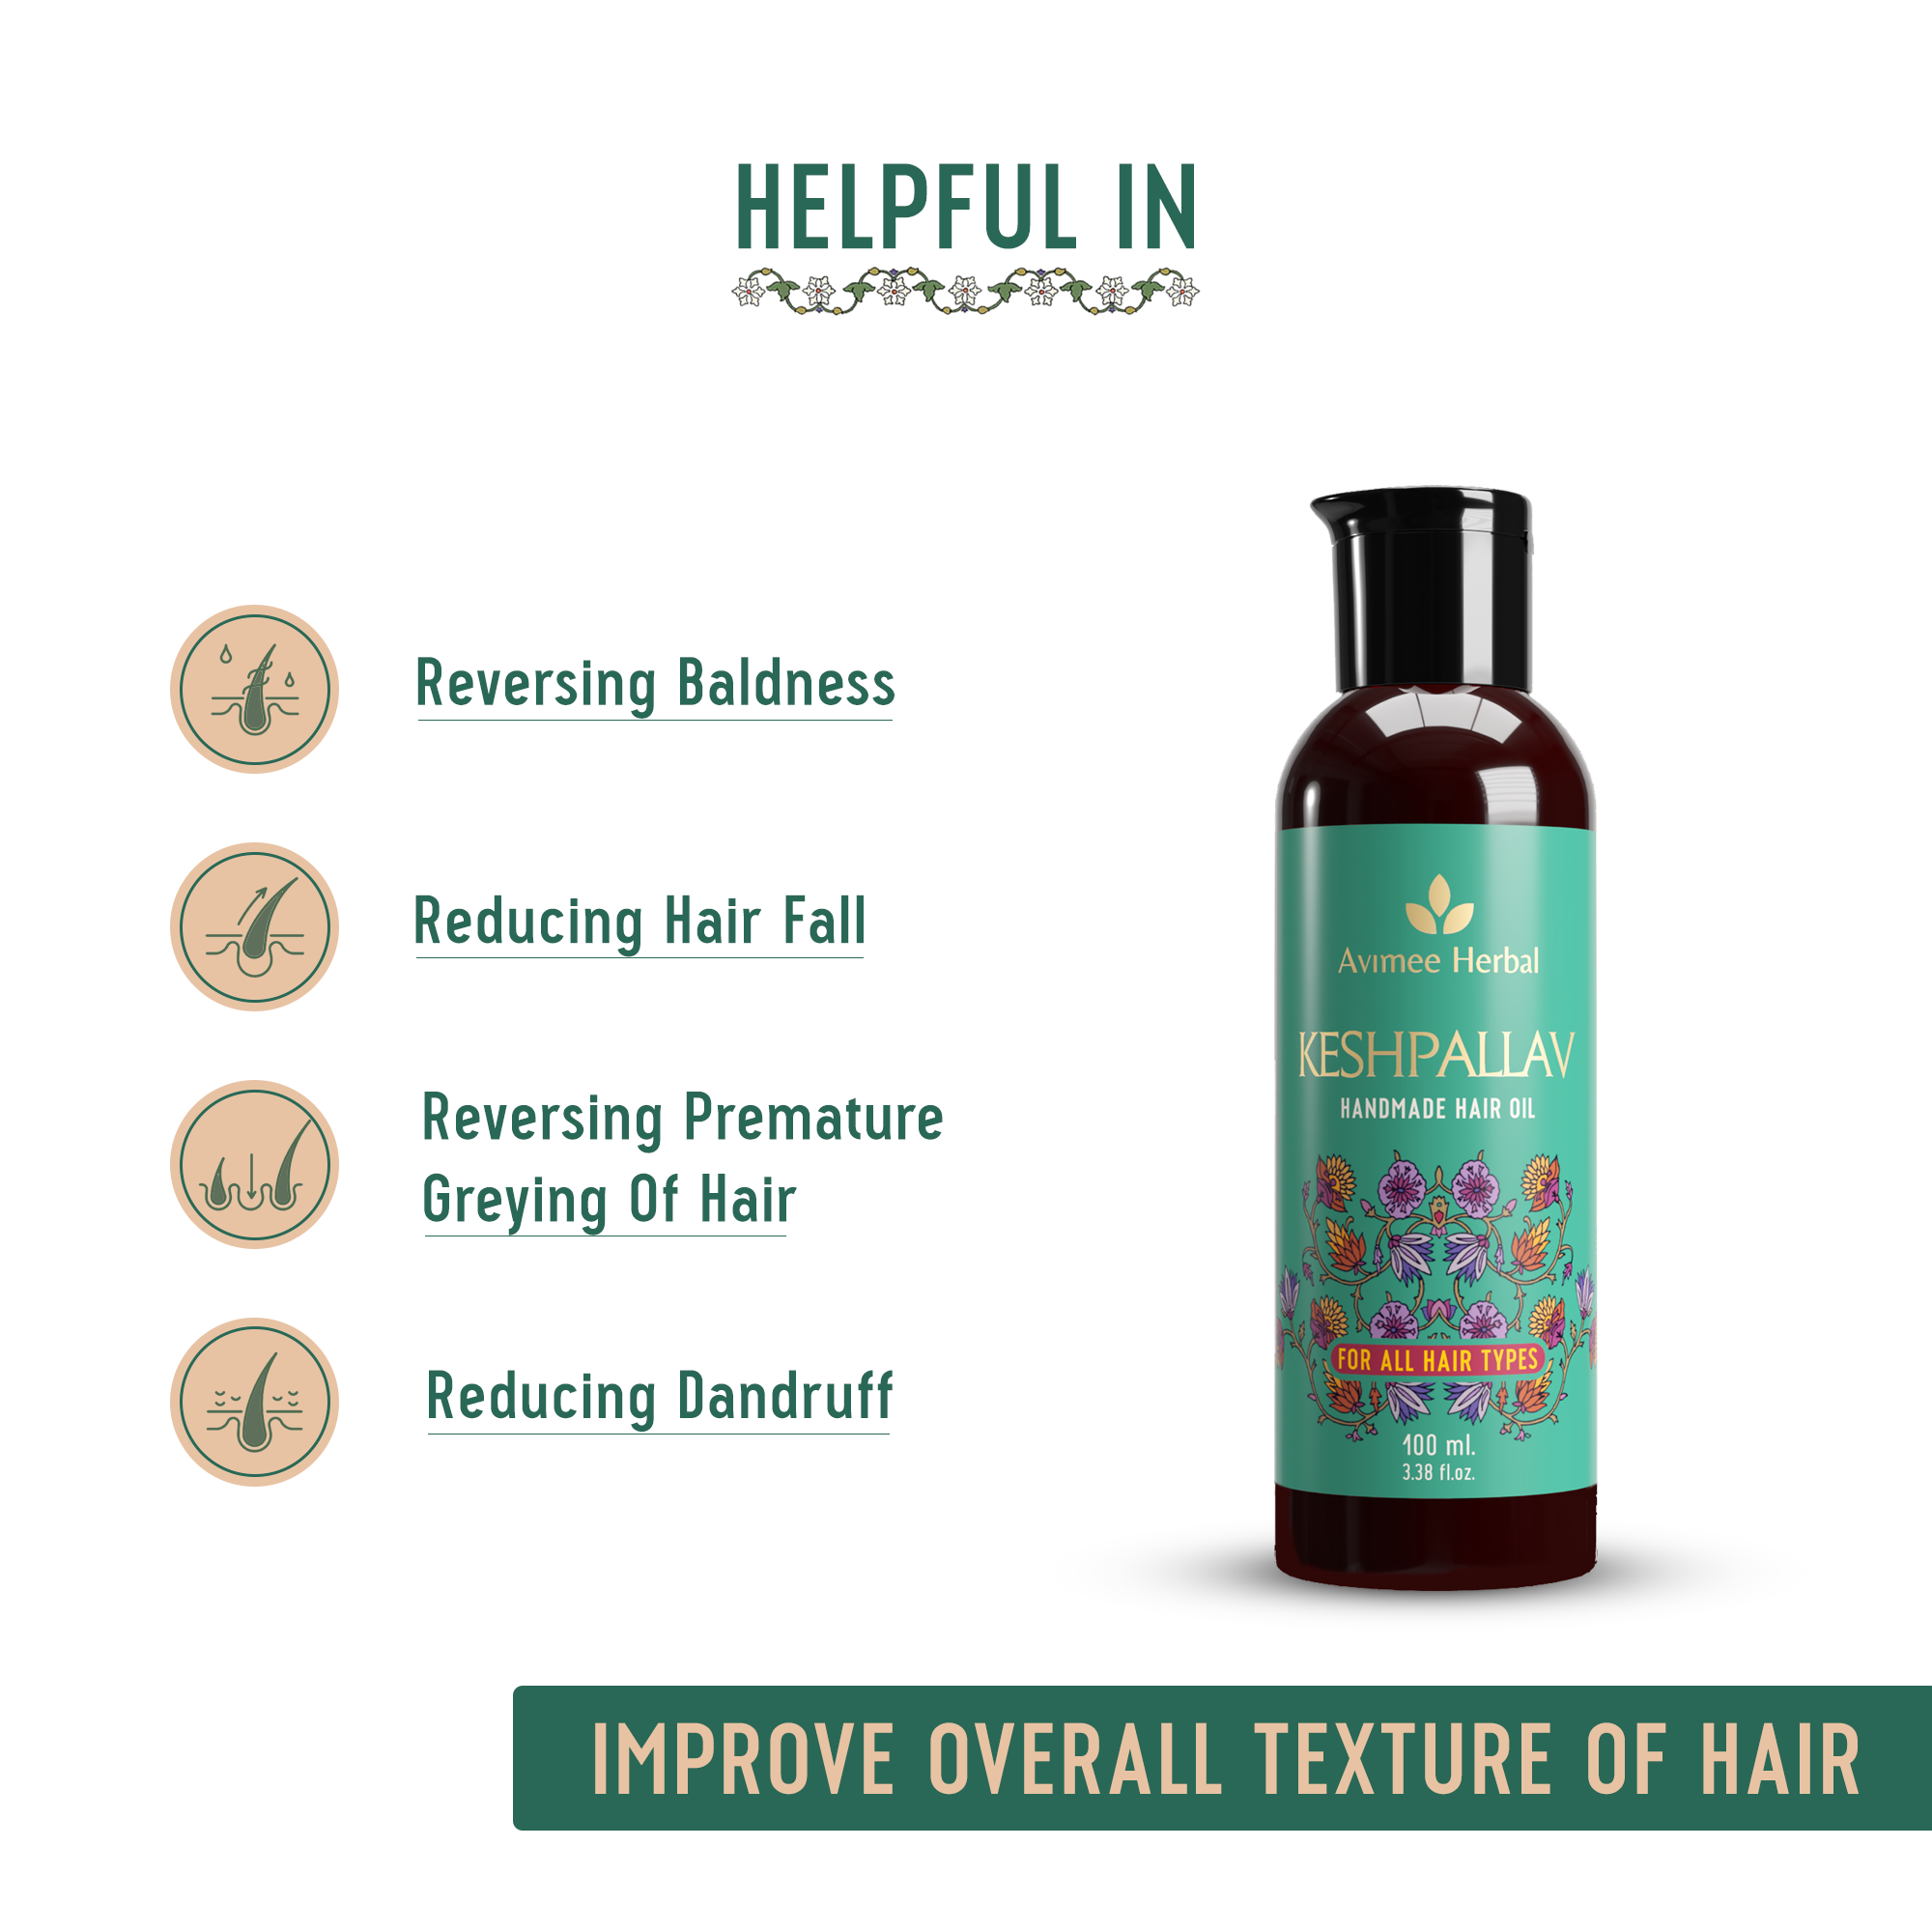 Avimee Herbal Hair Care Gift Box